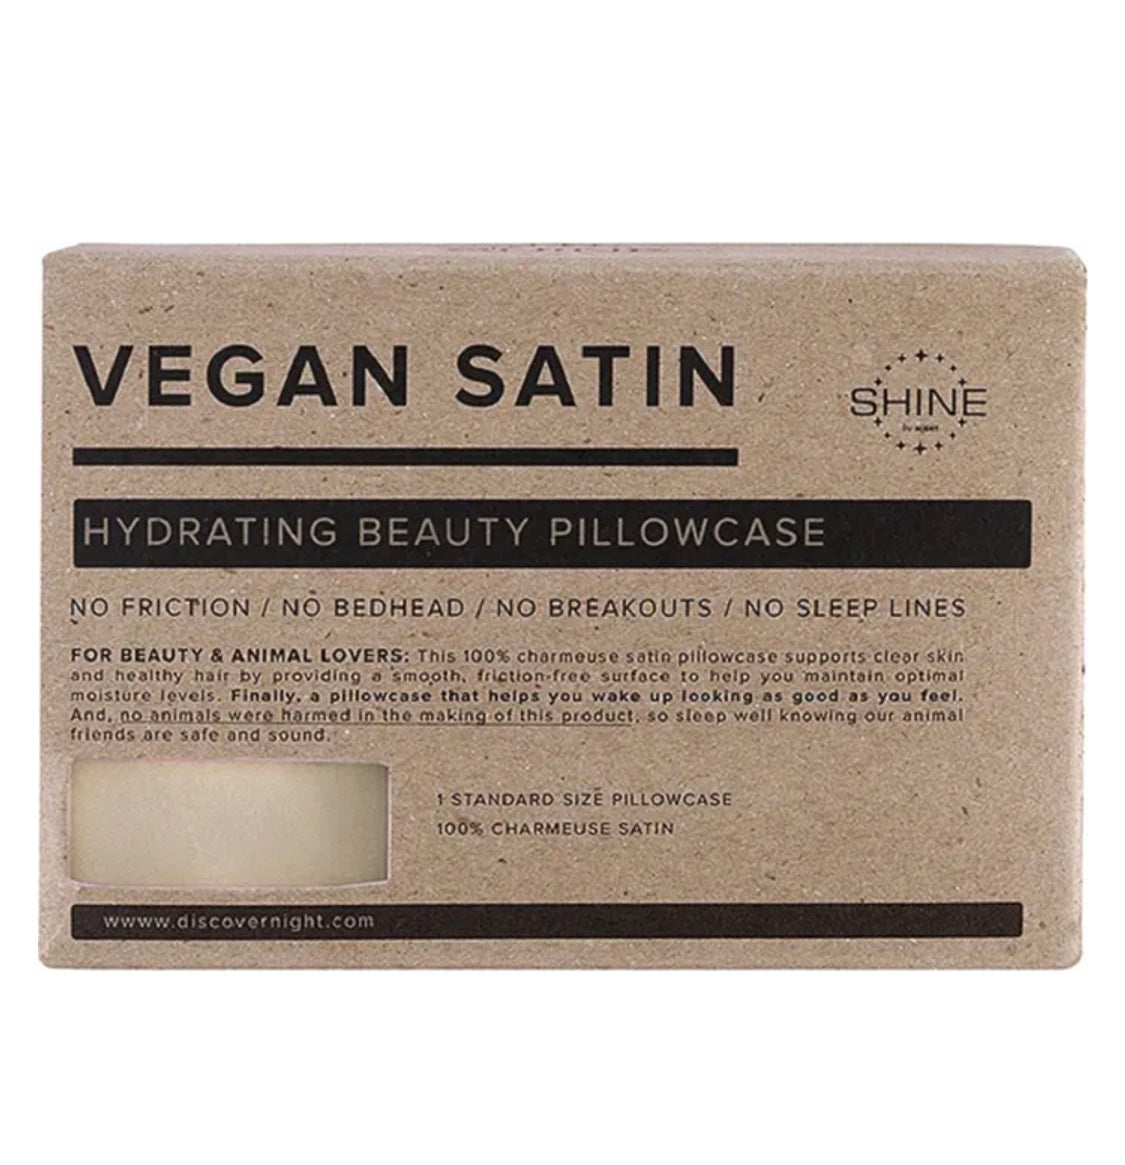 Vegan Satin Pillowcase